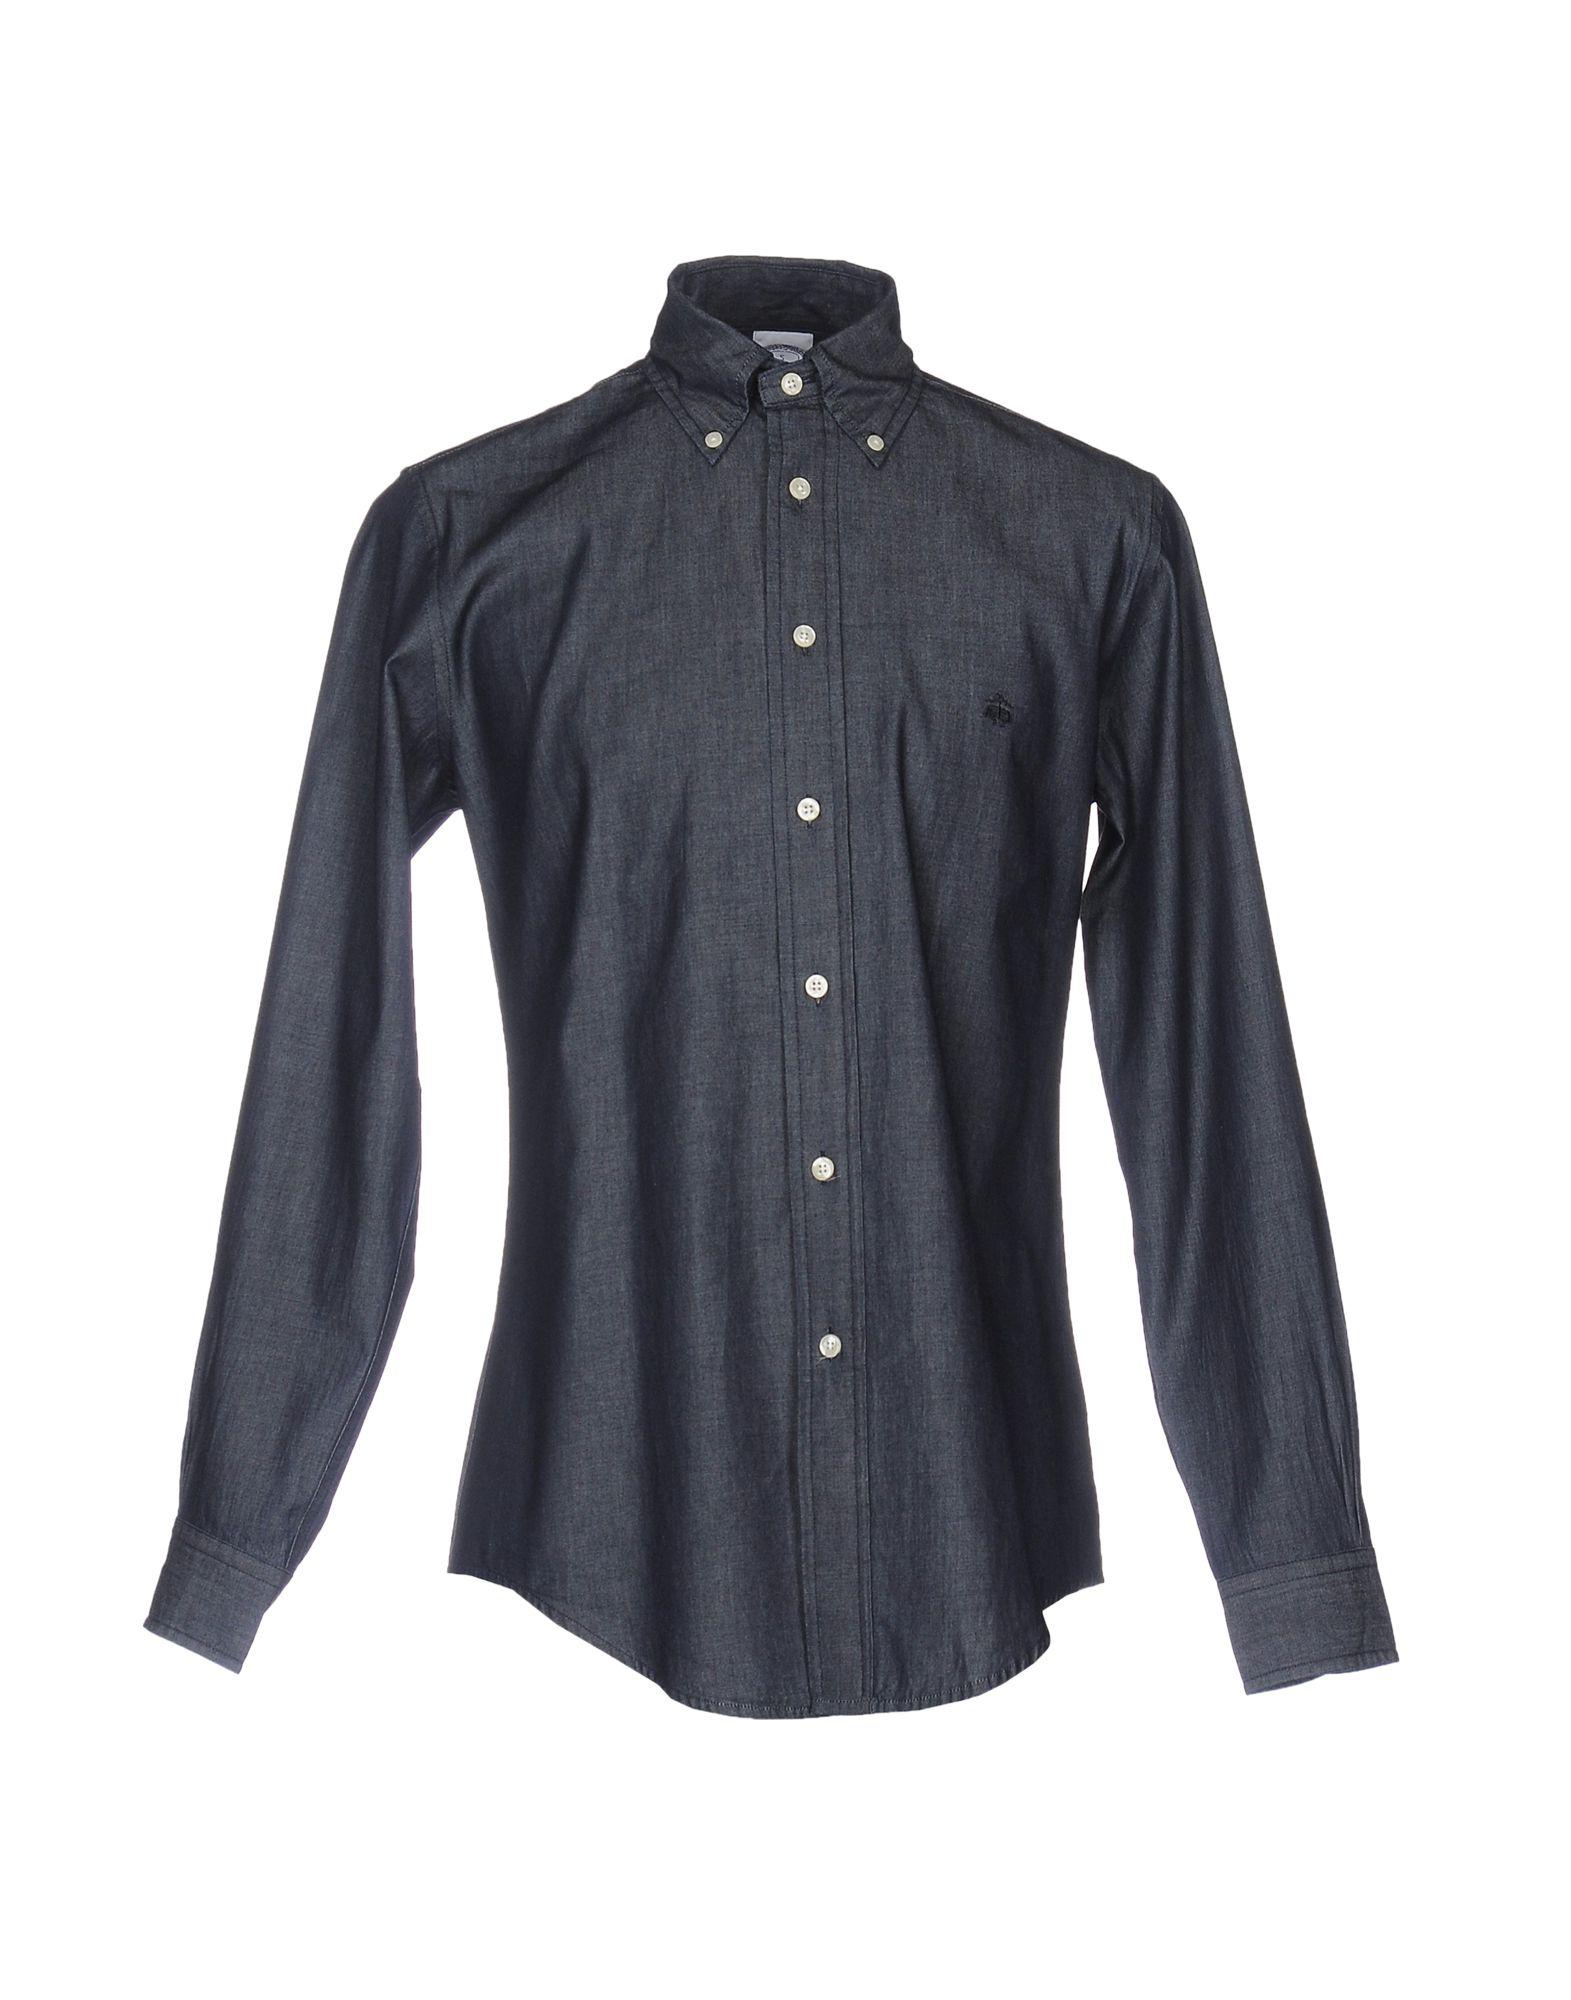 Lyst - Brooks Brothers Denim Shirt in Blue for Men